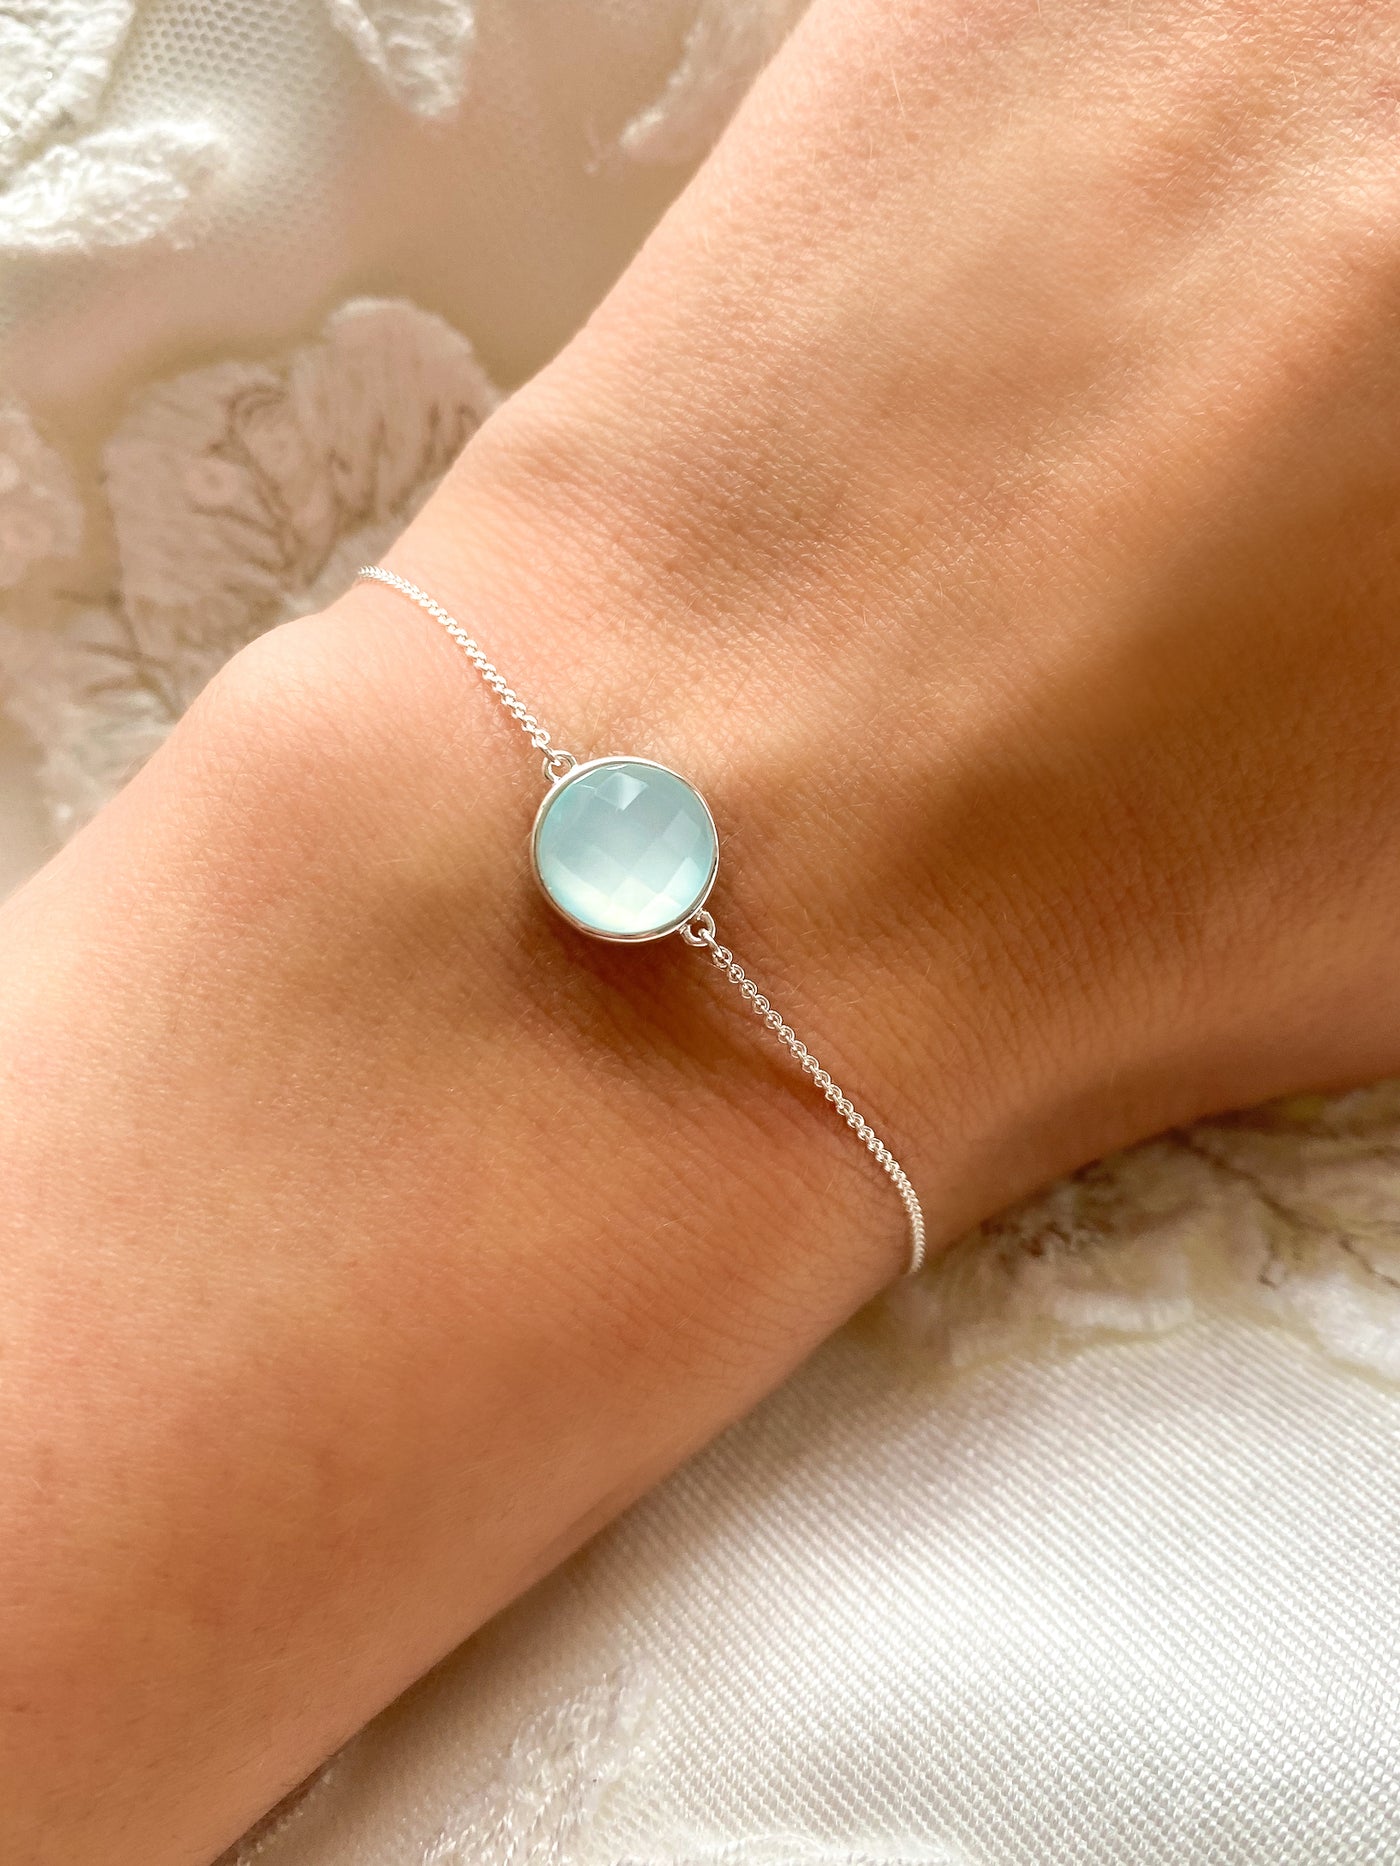  Model wearing silver bridal bracelet with blue aquamarine stone and wedding dress